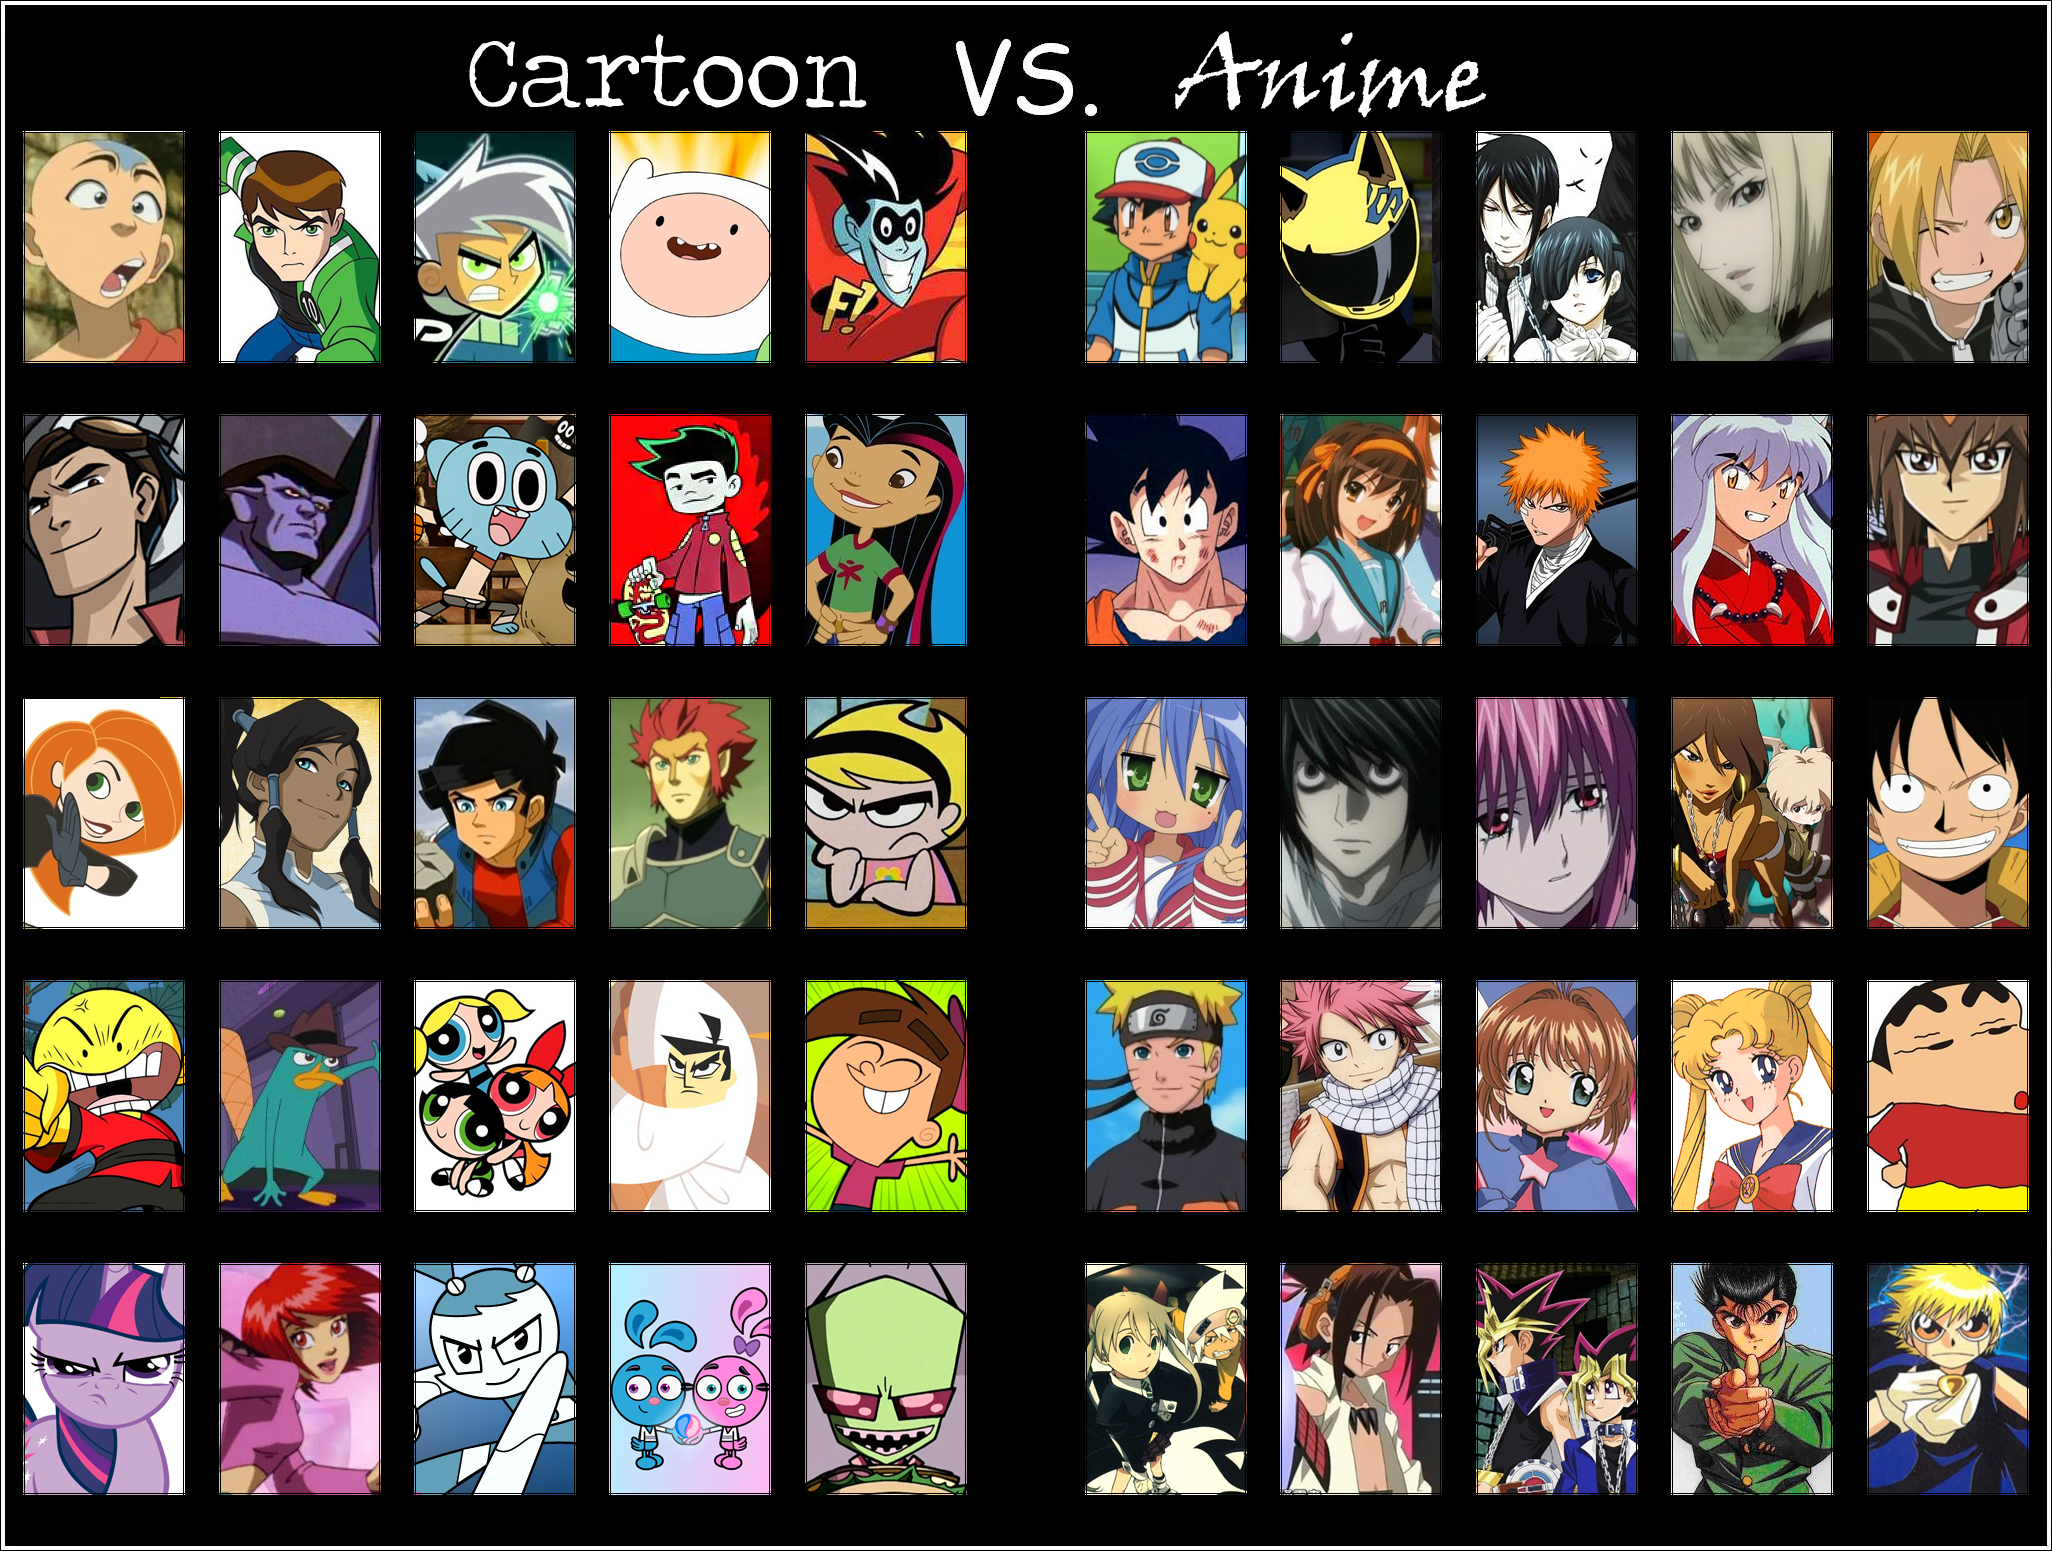 Cartoon Vs. Anime - Roster by juanito316ss on DeviantArt